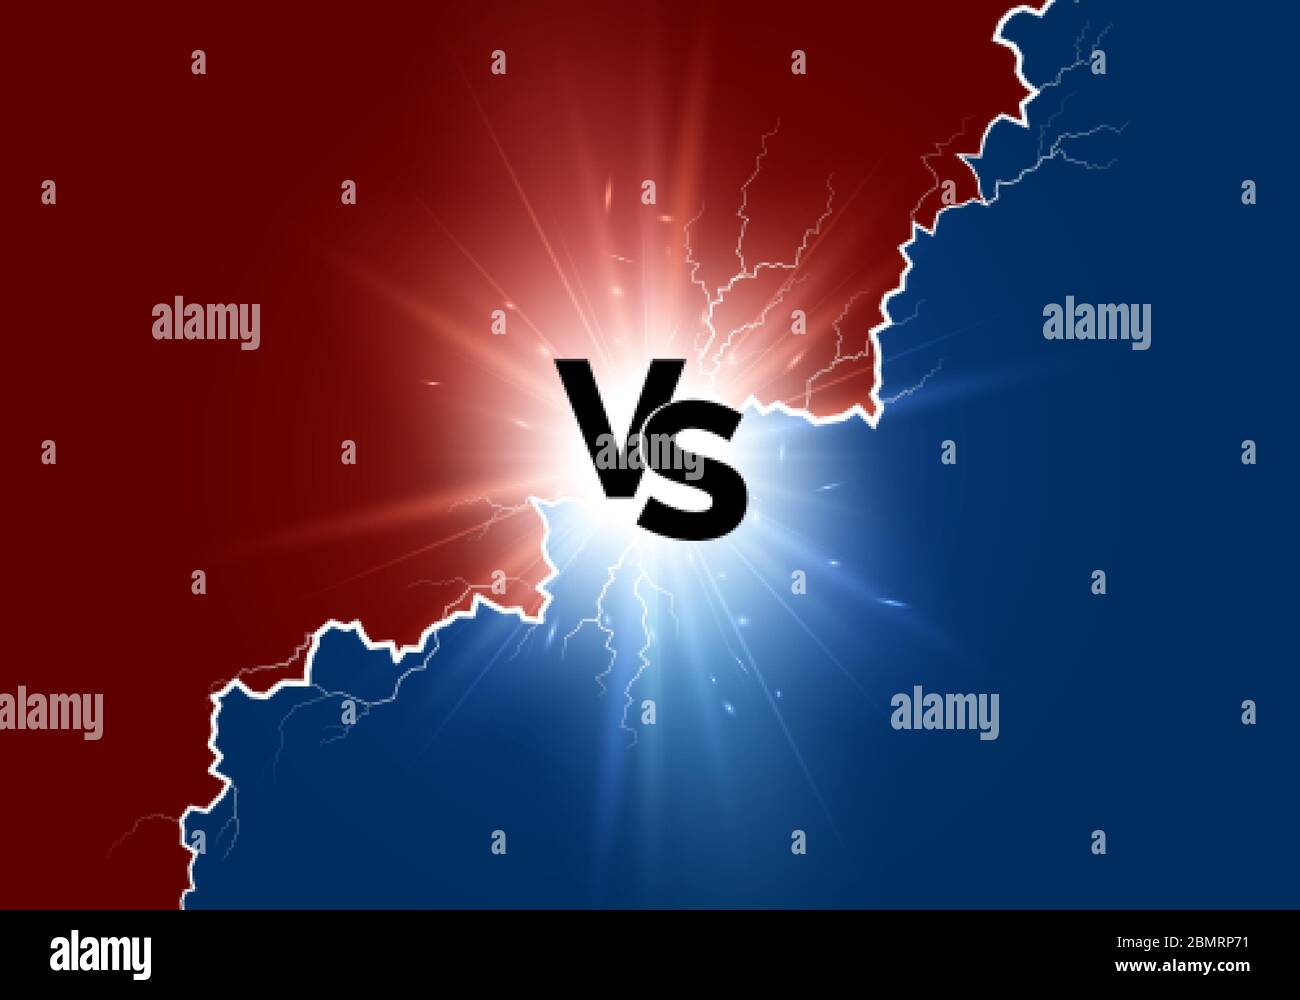 VS text with lightning. Versus battle. Sport or game background. Vector illustration Stock Vector